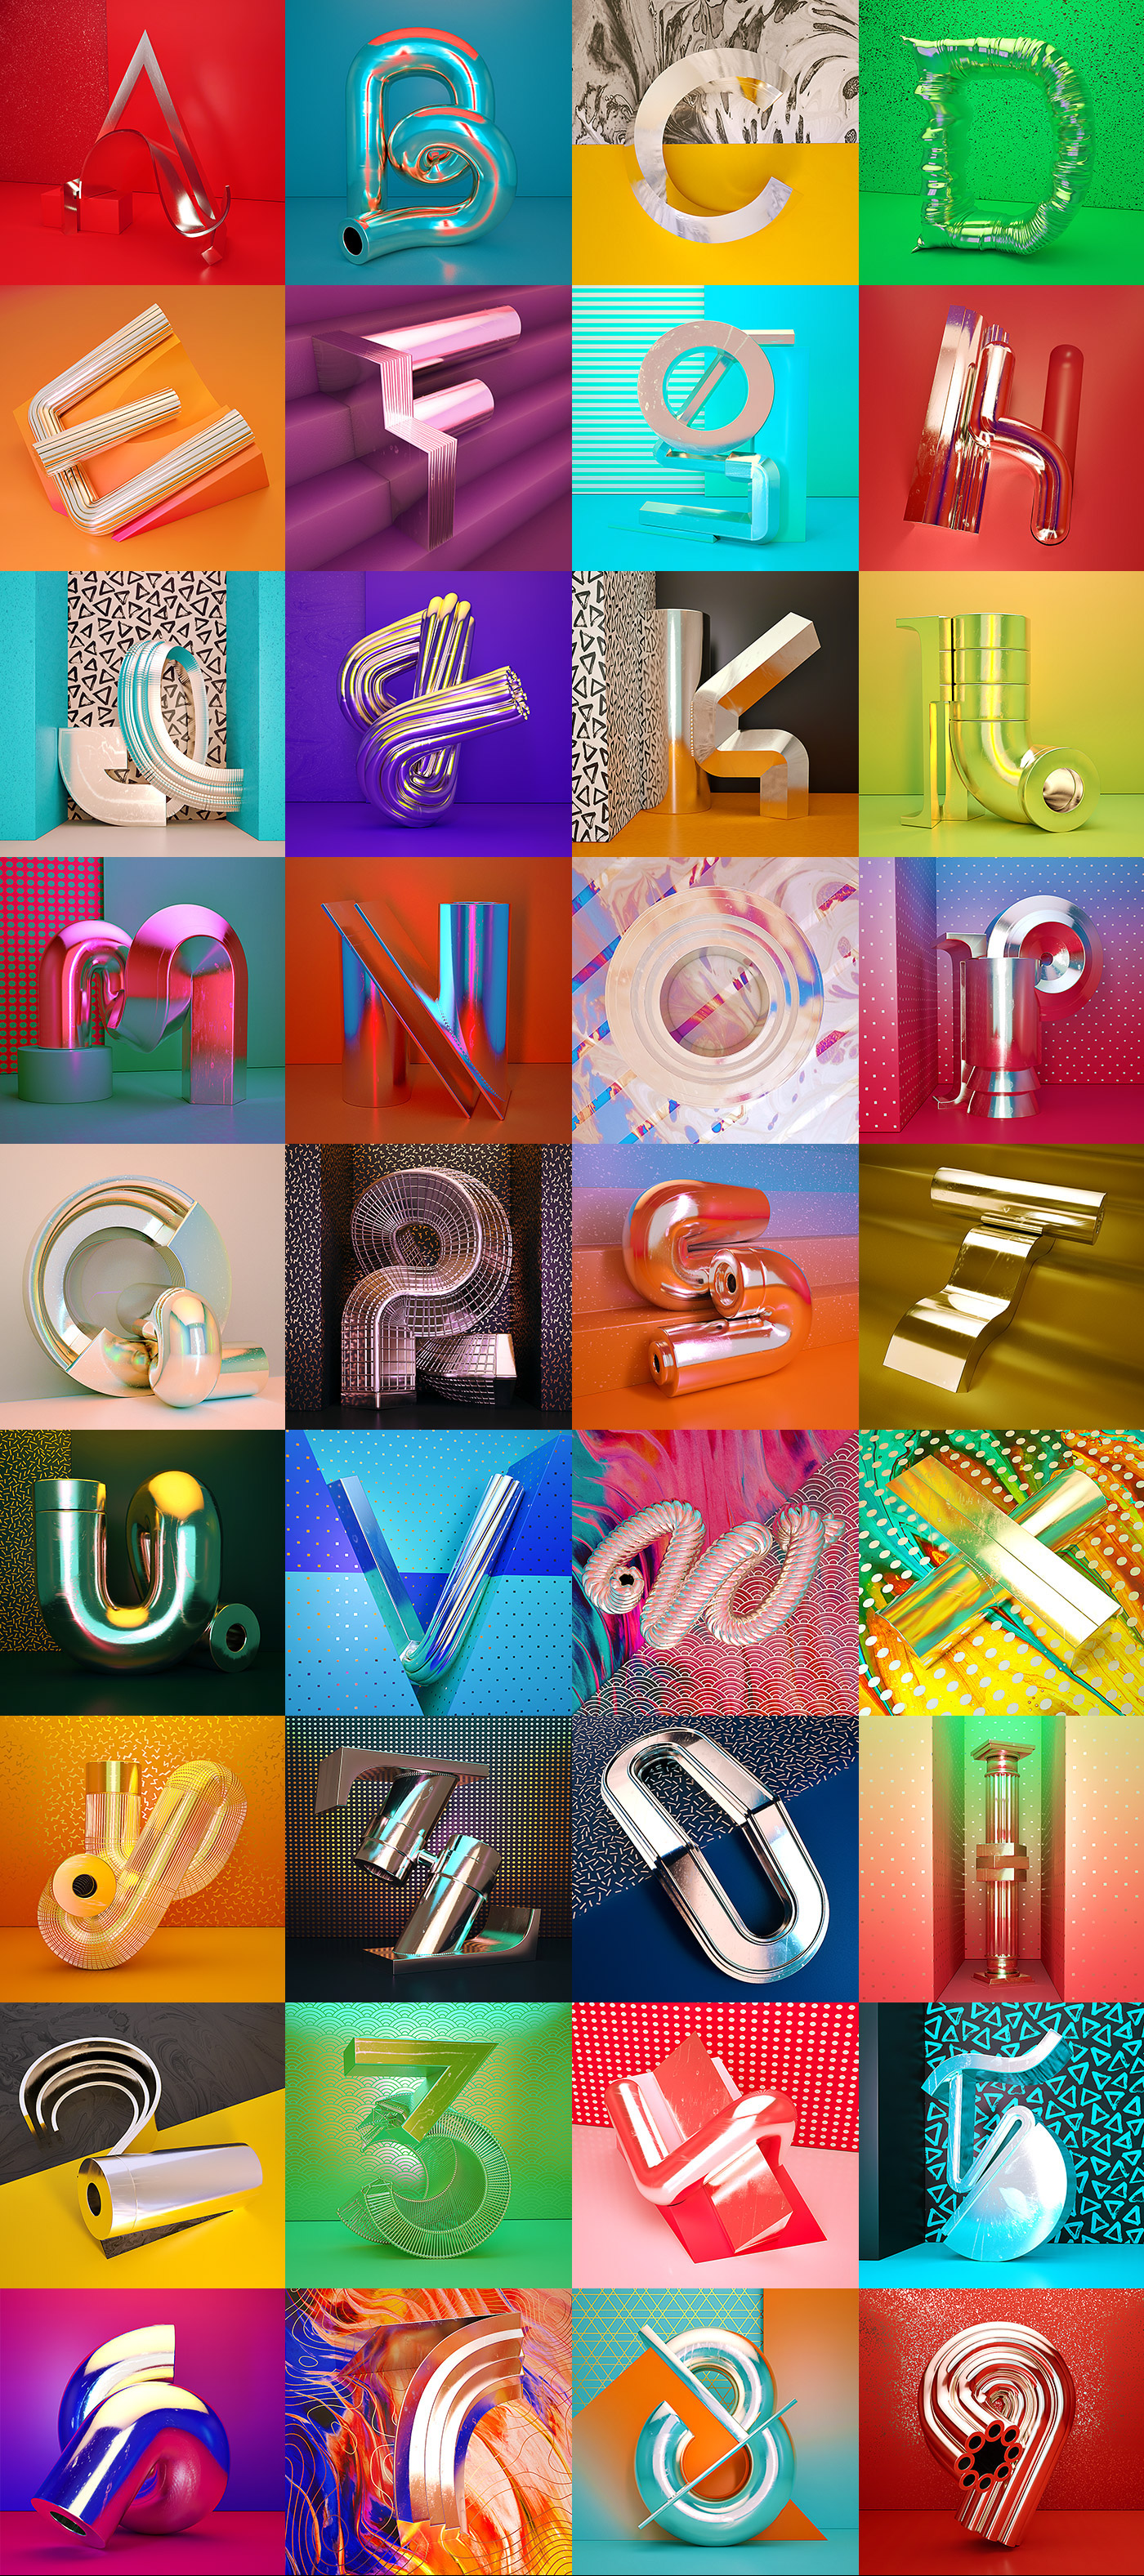 chrome type chrometype 36daysoftype graphics lettering color sculpture c4d everyday design aaron kaufman Form art 3D